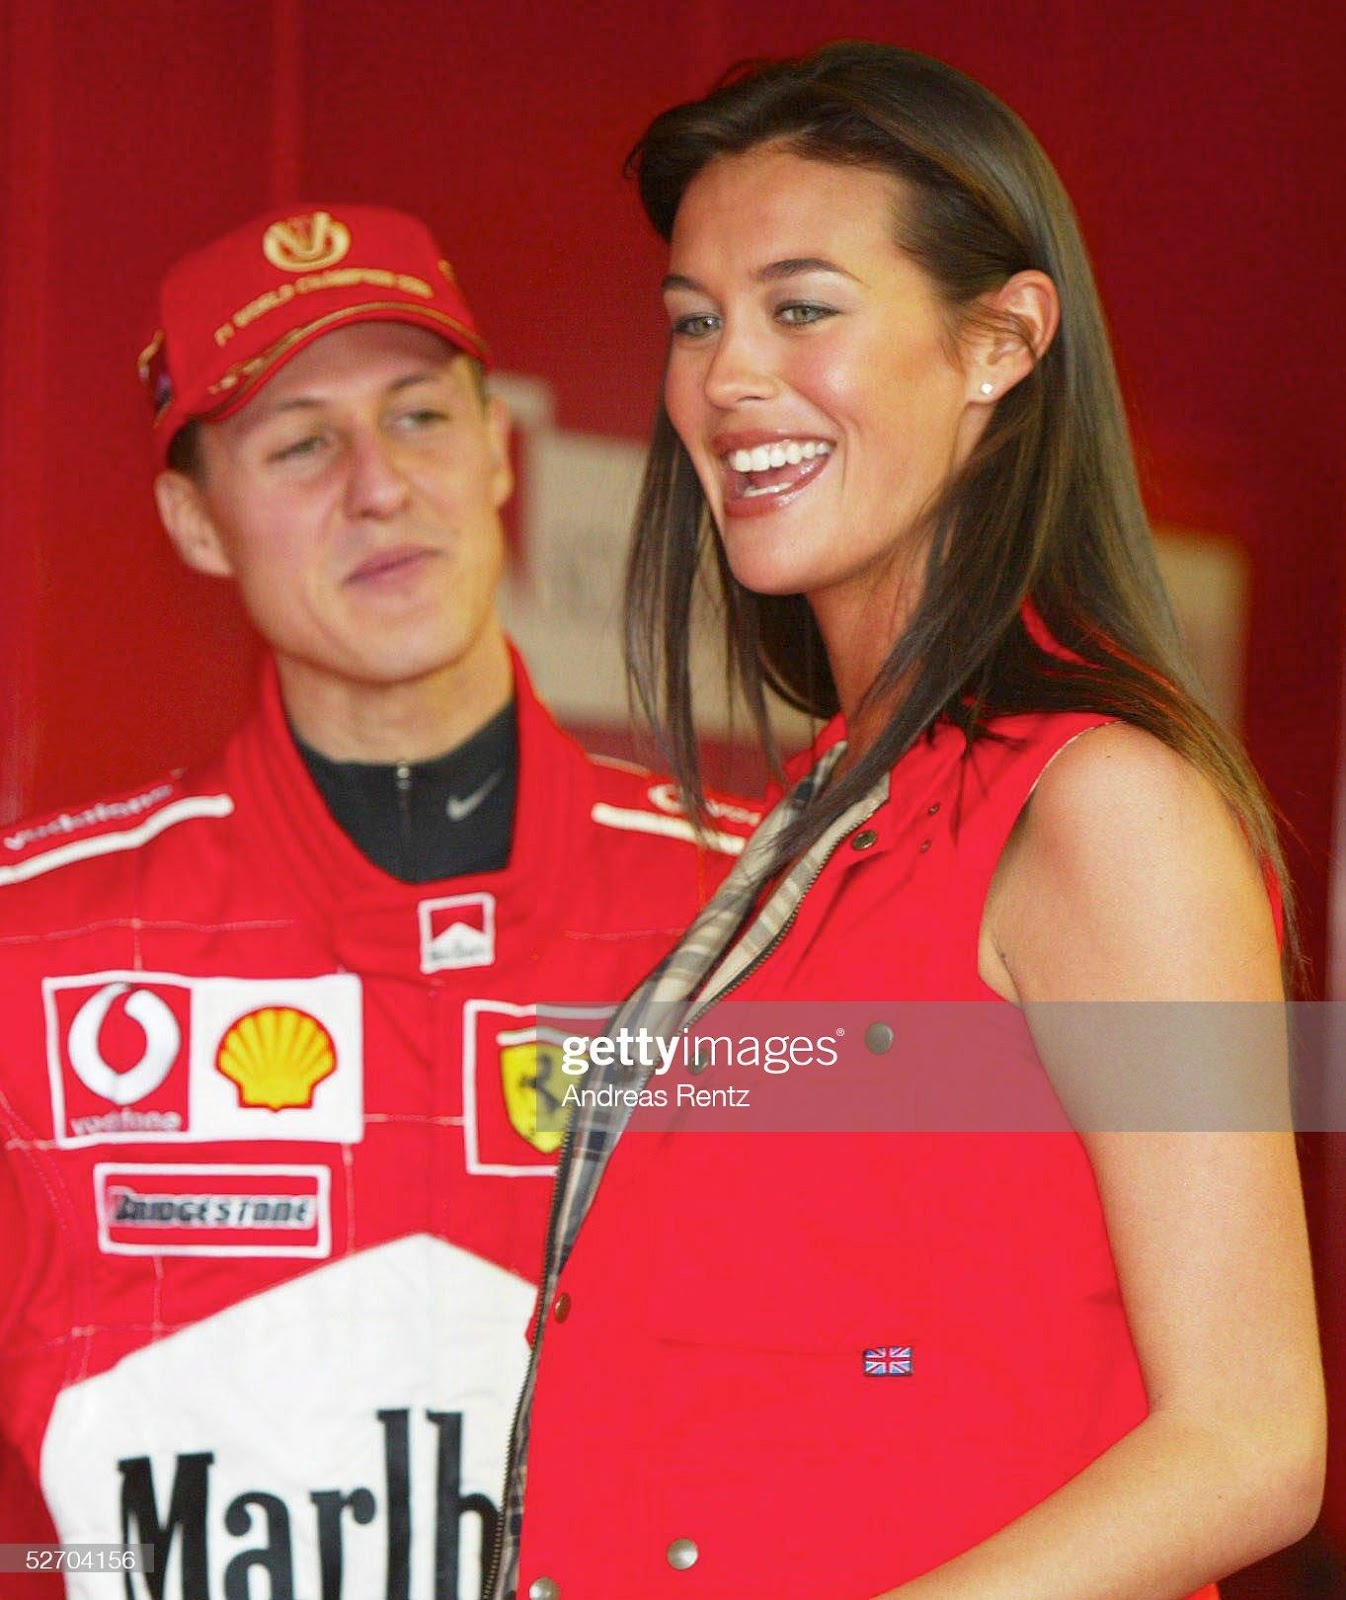 Michael Schumacher, Ferrari, with Australian model Megan Gale at the Australian Grand Prix on March 01, 2002.